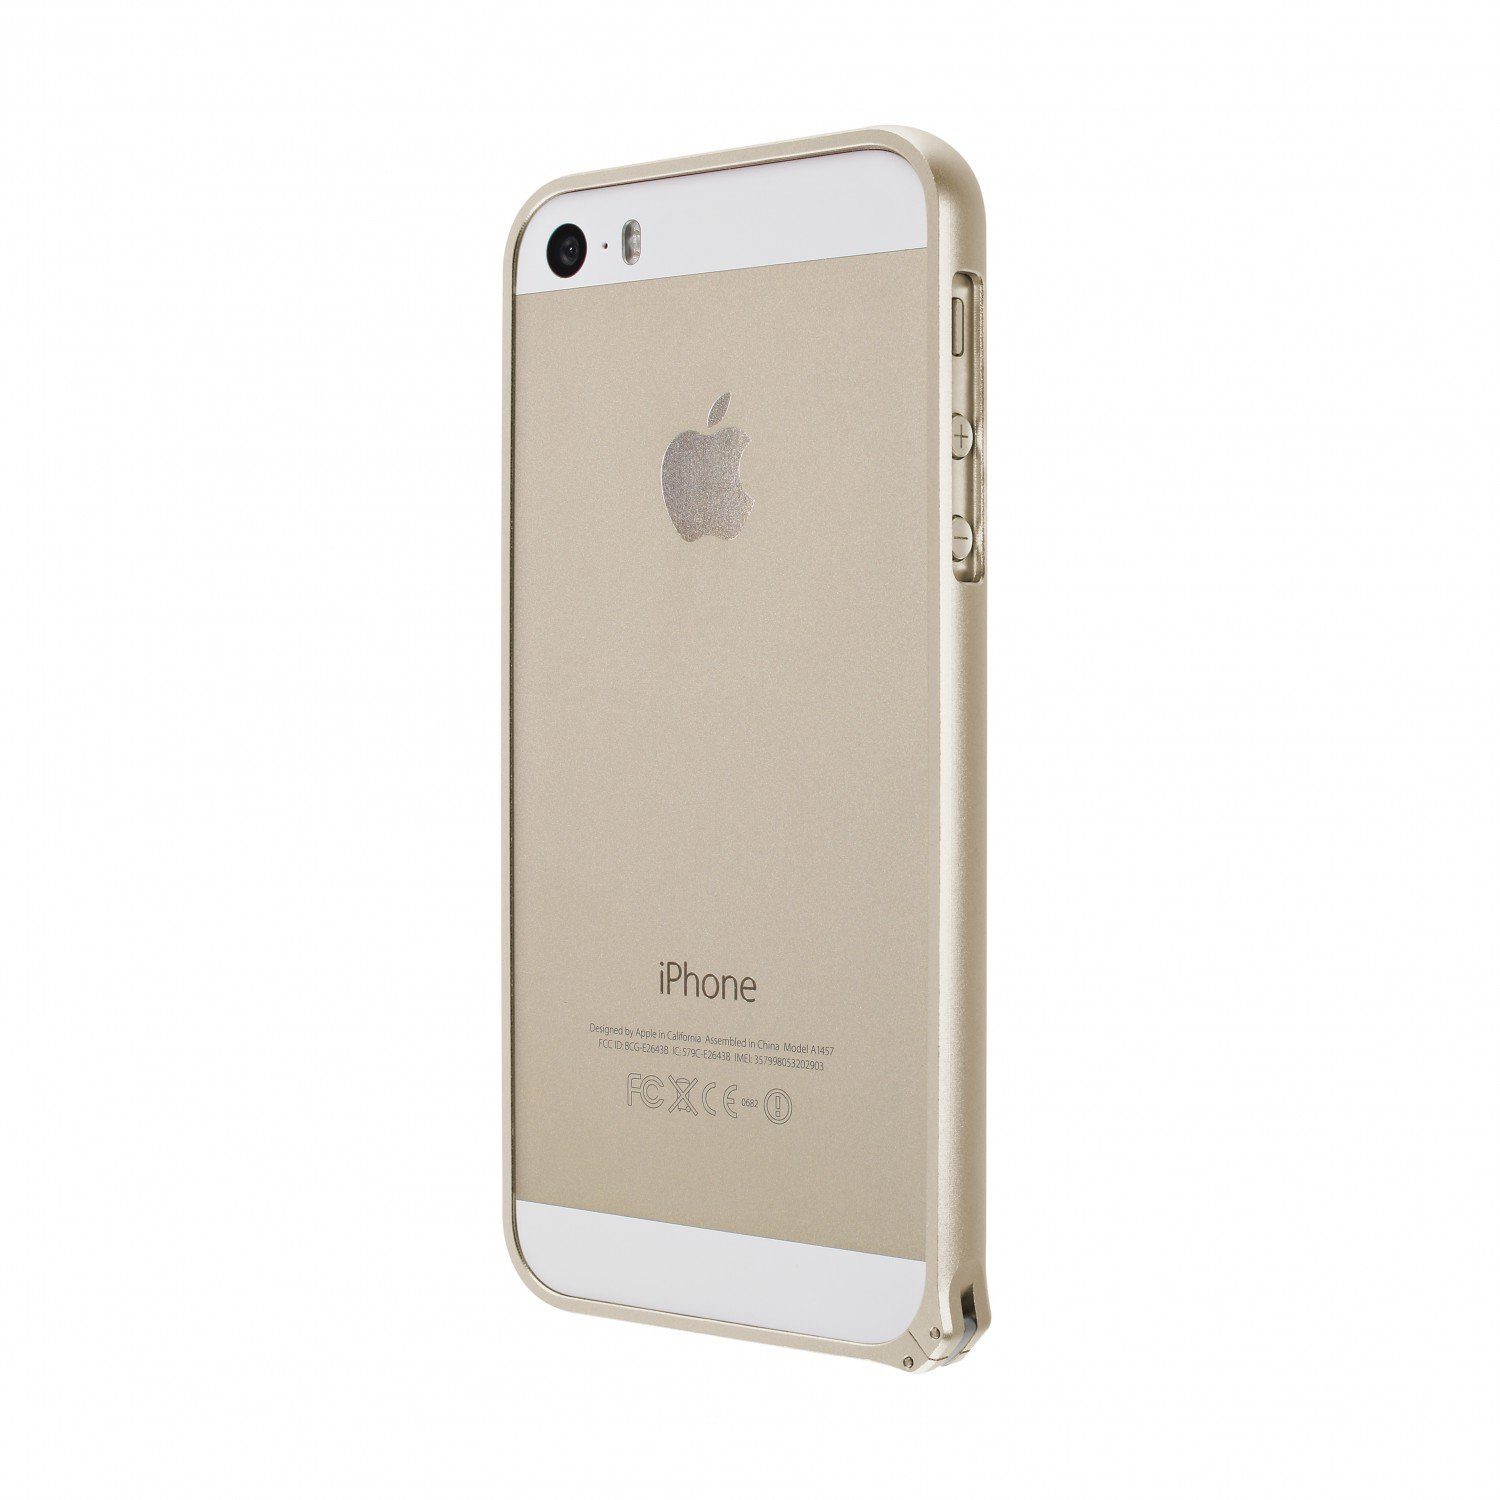 Artwizz Bumper AluBumper, Aluminium Schutzrahmen aus rostfreiem Stahl, Gold, iPhone SE (2016), iPhone 5S, iPhone 5